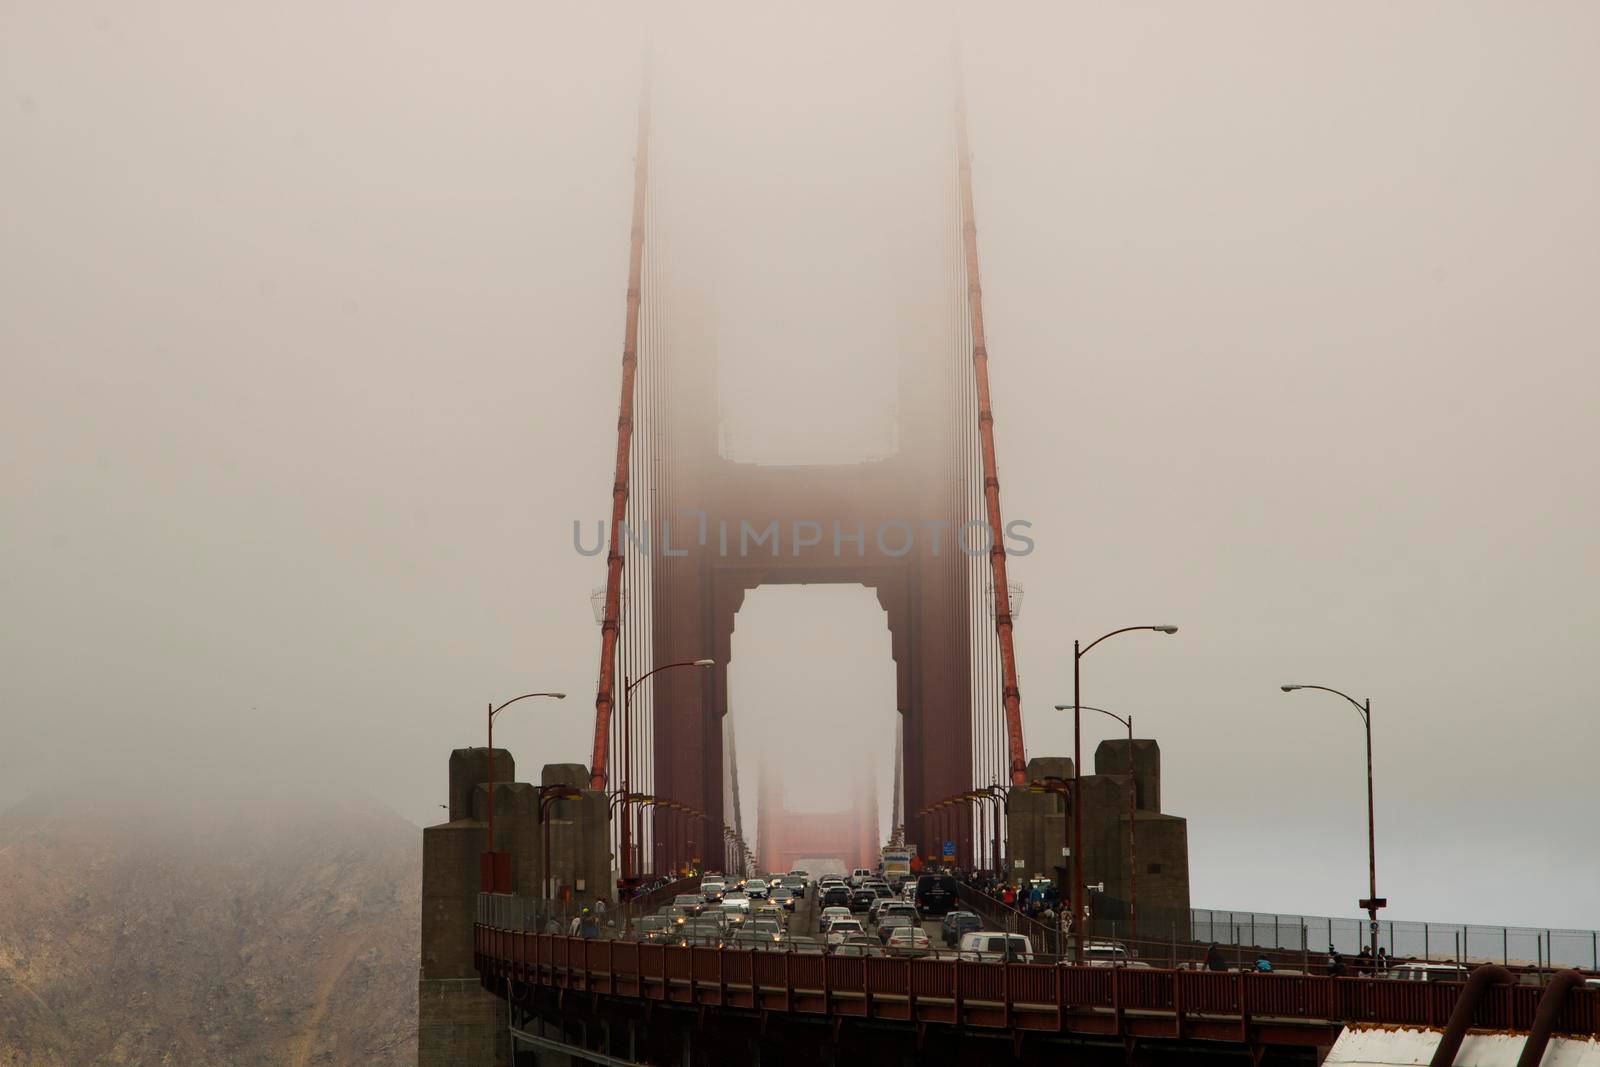 Golden Gate bridge in San Francisco surrounded by fog